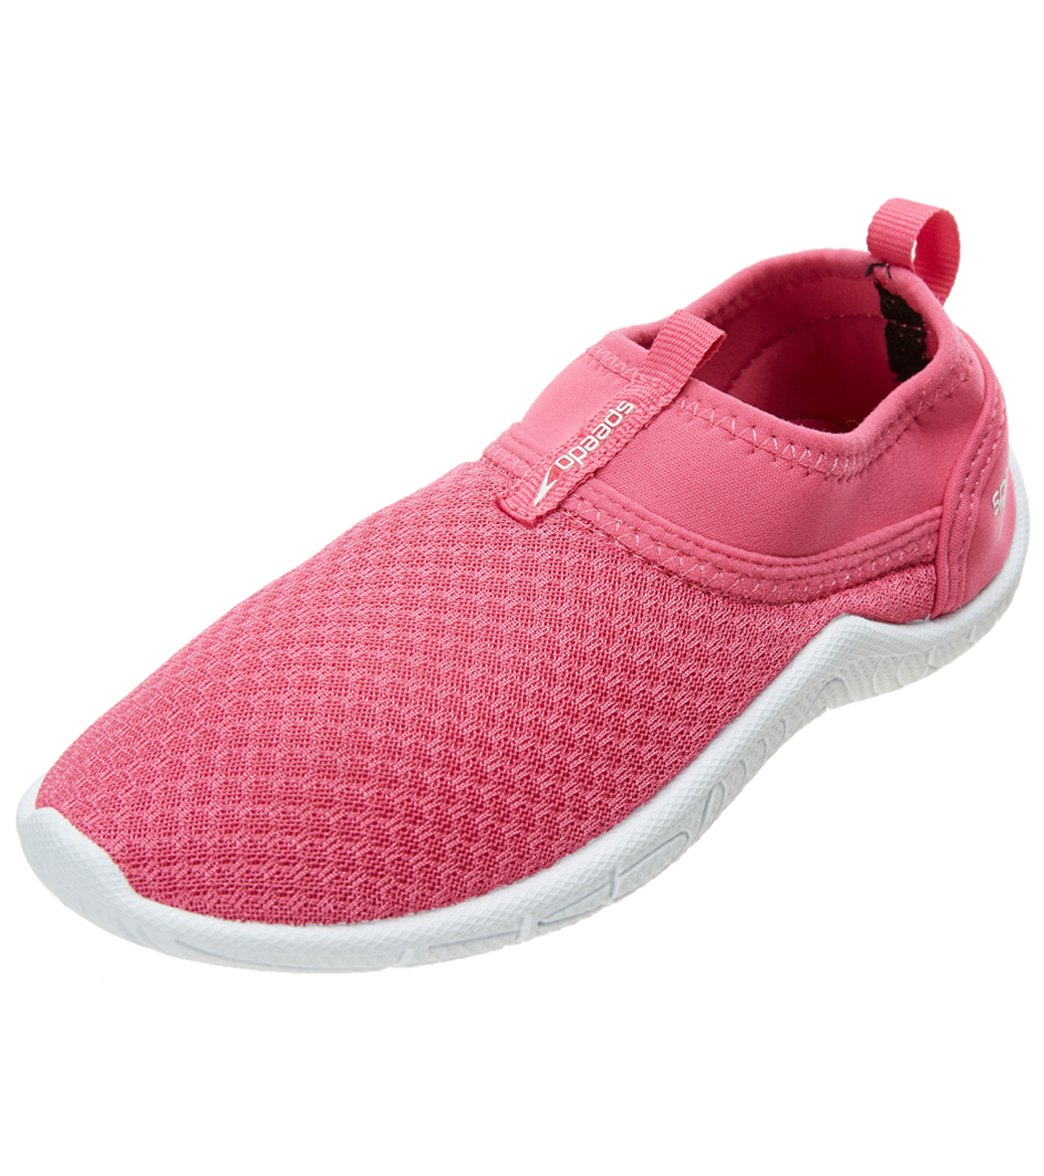 Speedo Kids' Tidal Cruiser Water Shoe - Pink/White 1 - Swimoutlet.com